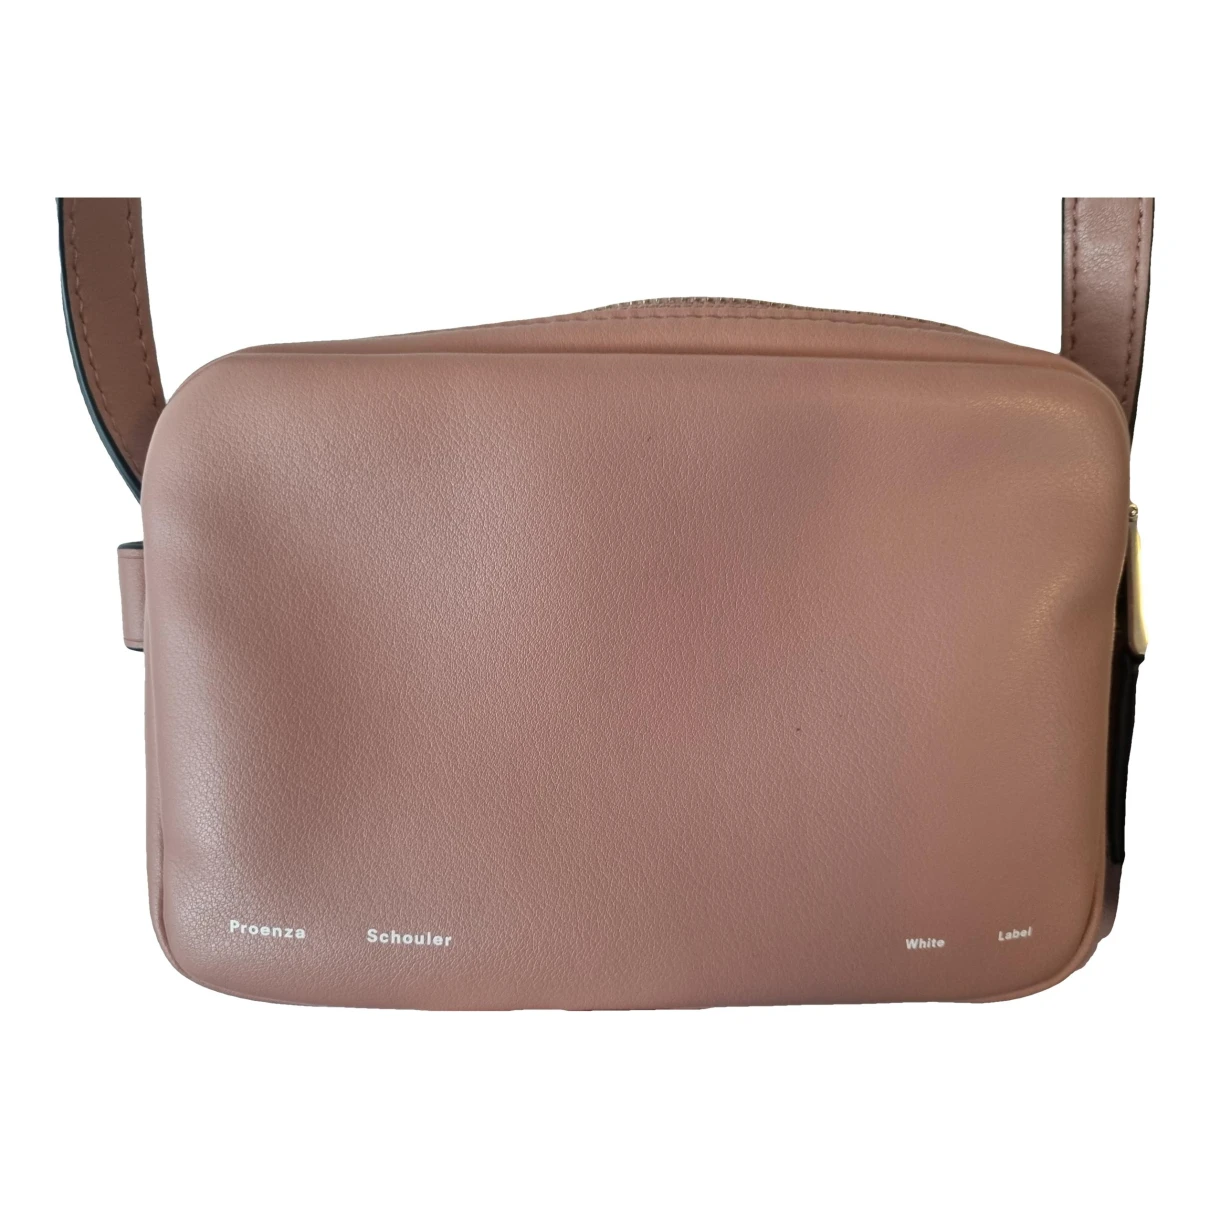 Pre-owned Proenza Schouler Leather Handbag In Pink